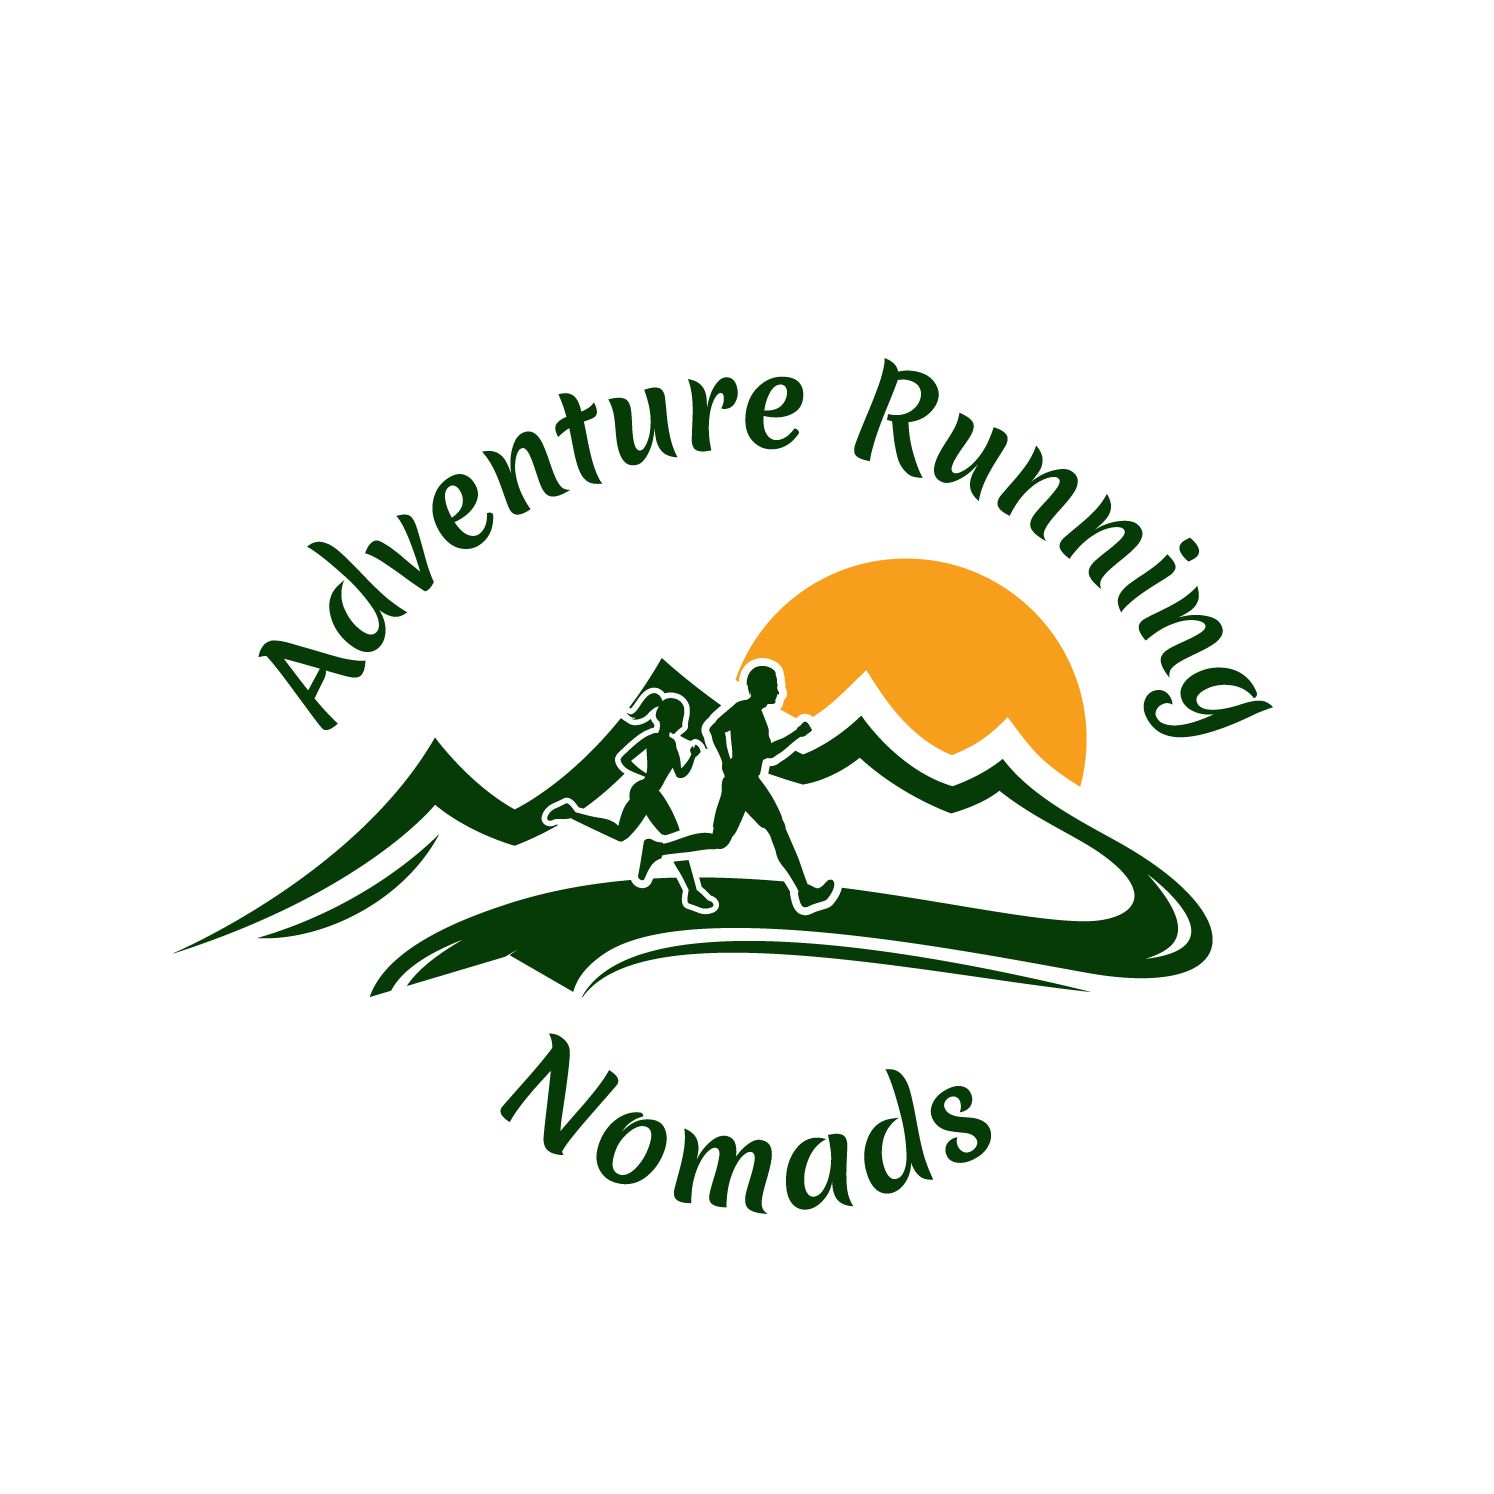 Adventure Running Nomads